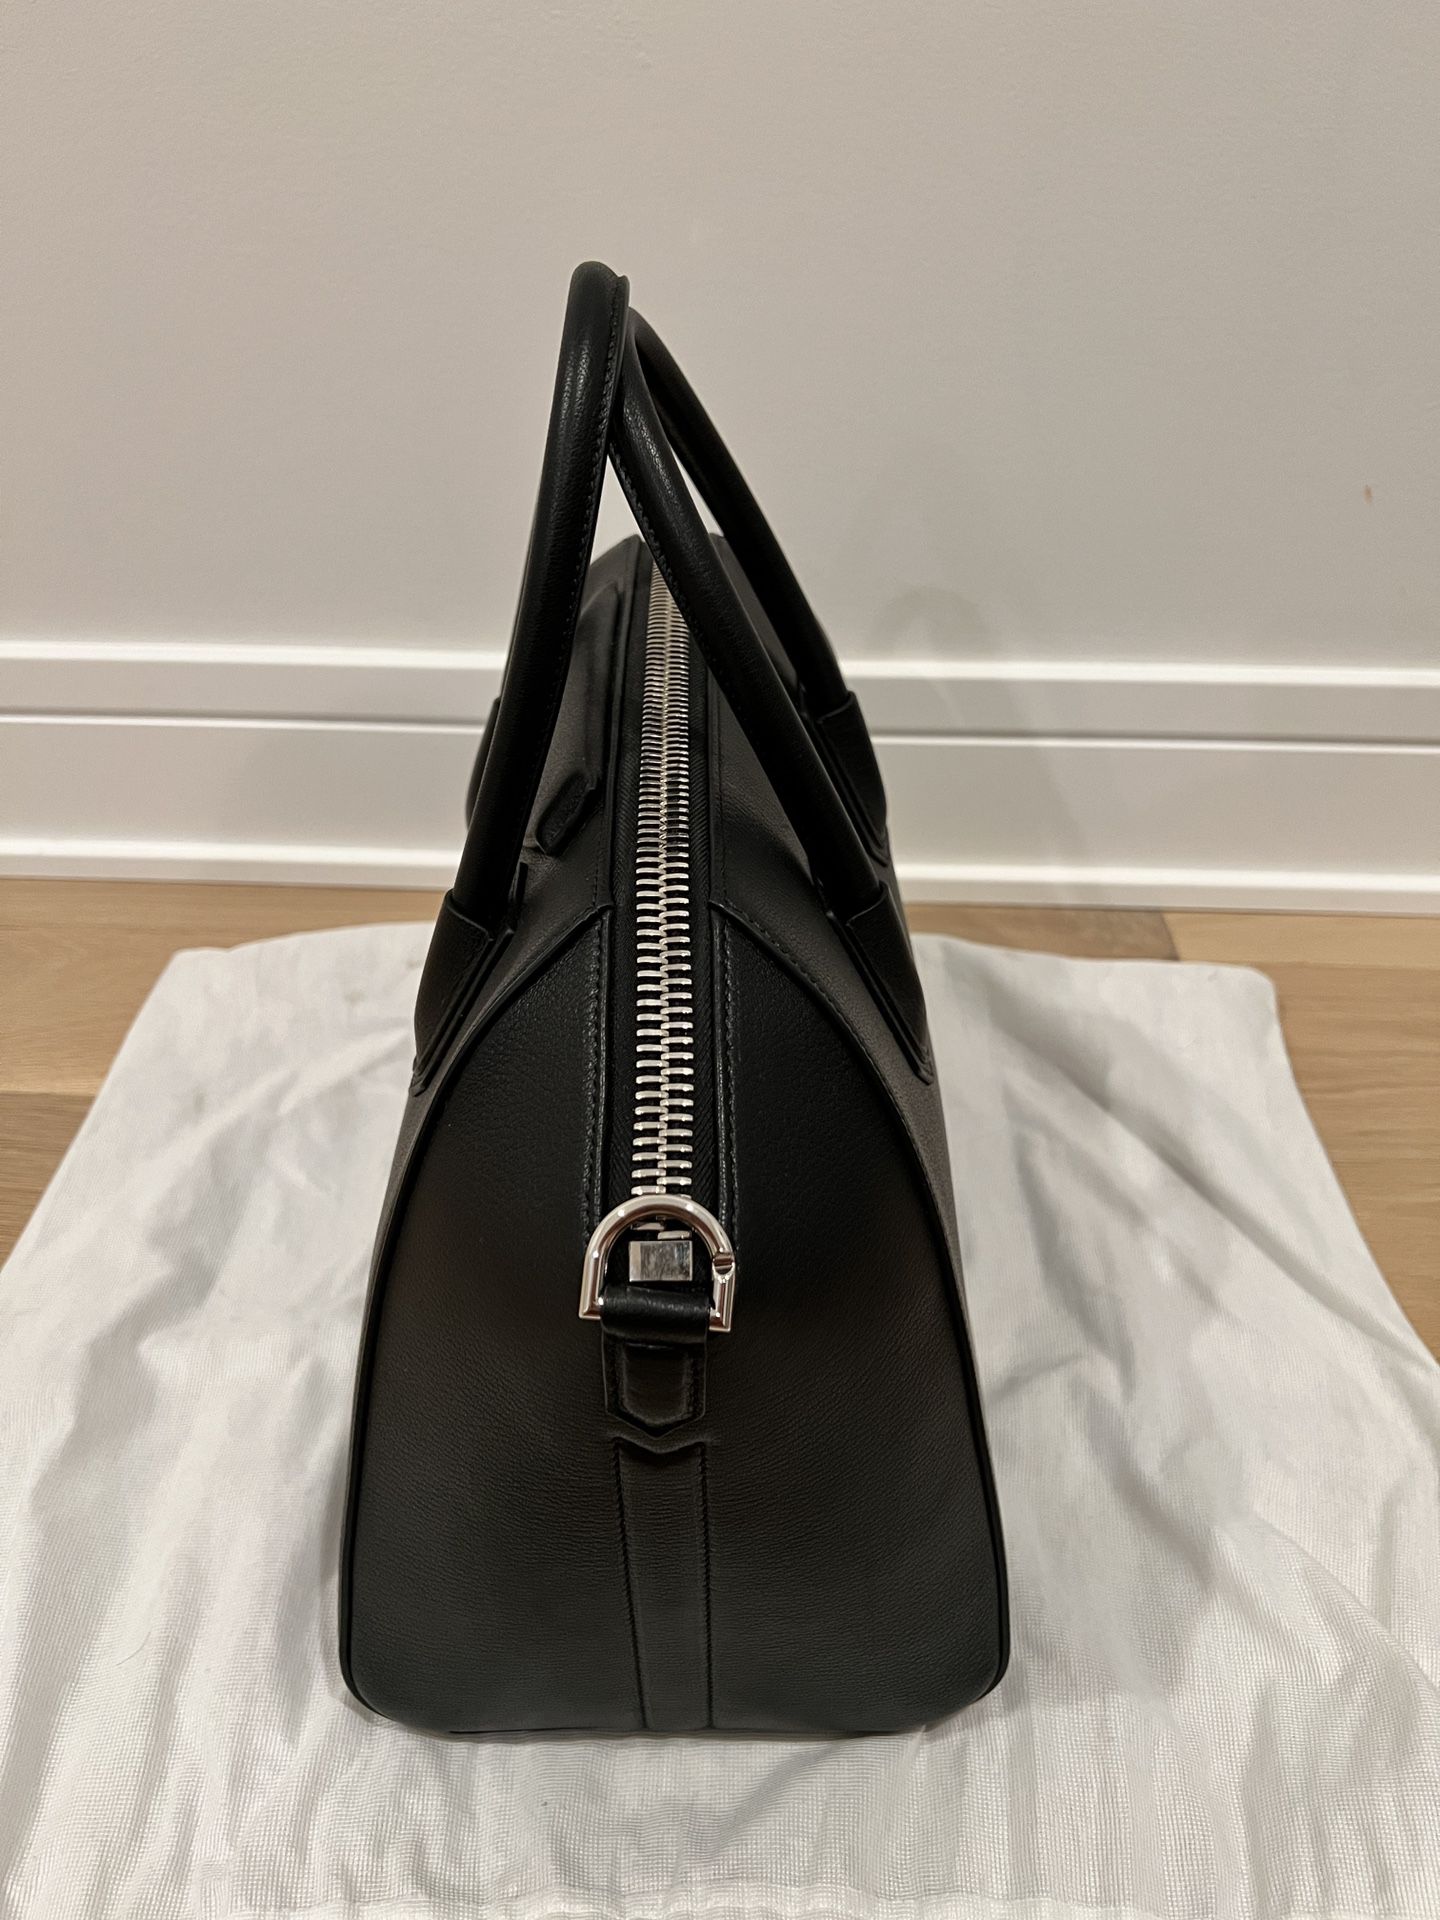 Givenchy Medium Antigona Black Sugar Leather Satchel Purse - New + Receipt